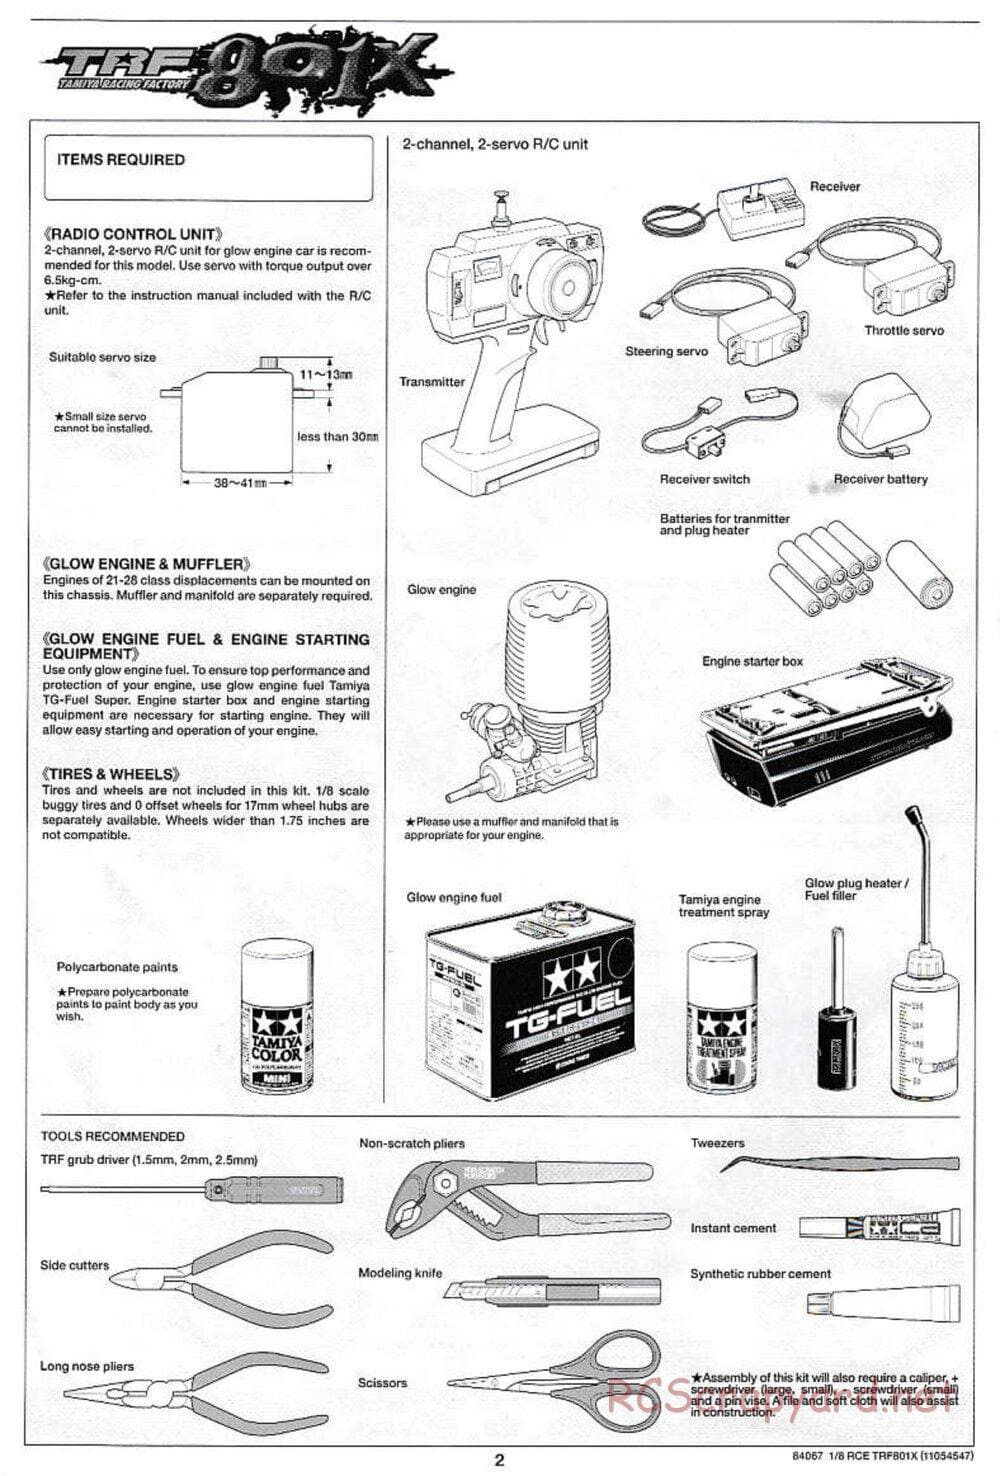 Tamiya - TRF801X Chassis - Manual - Page 2